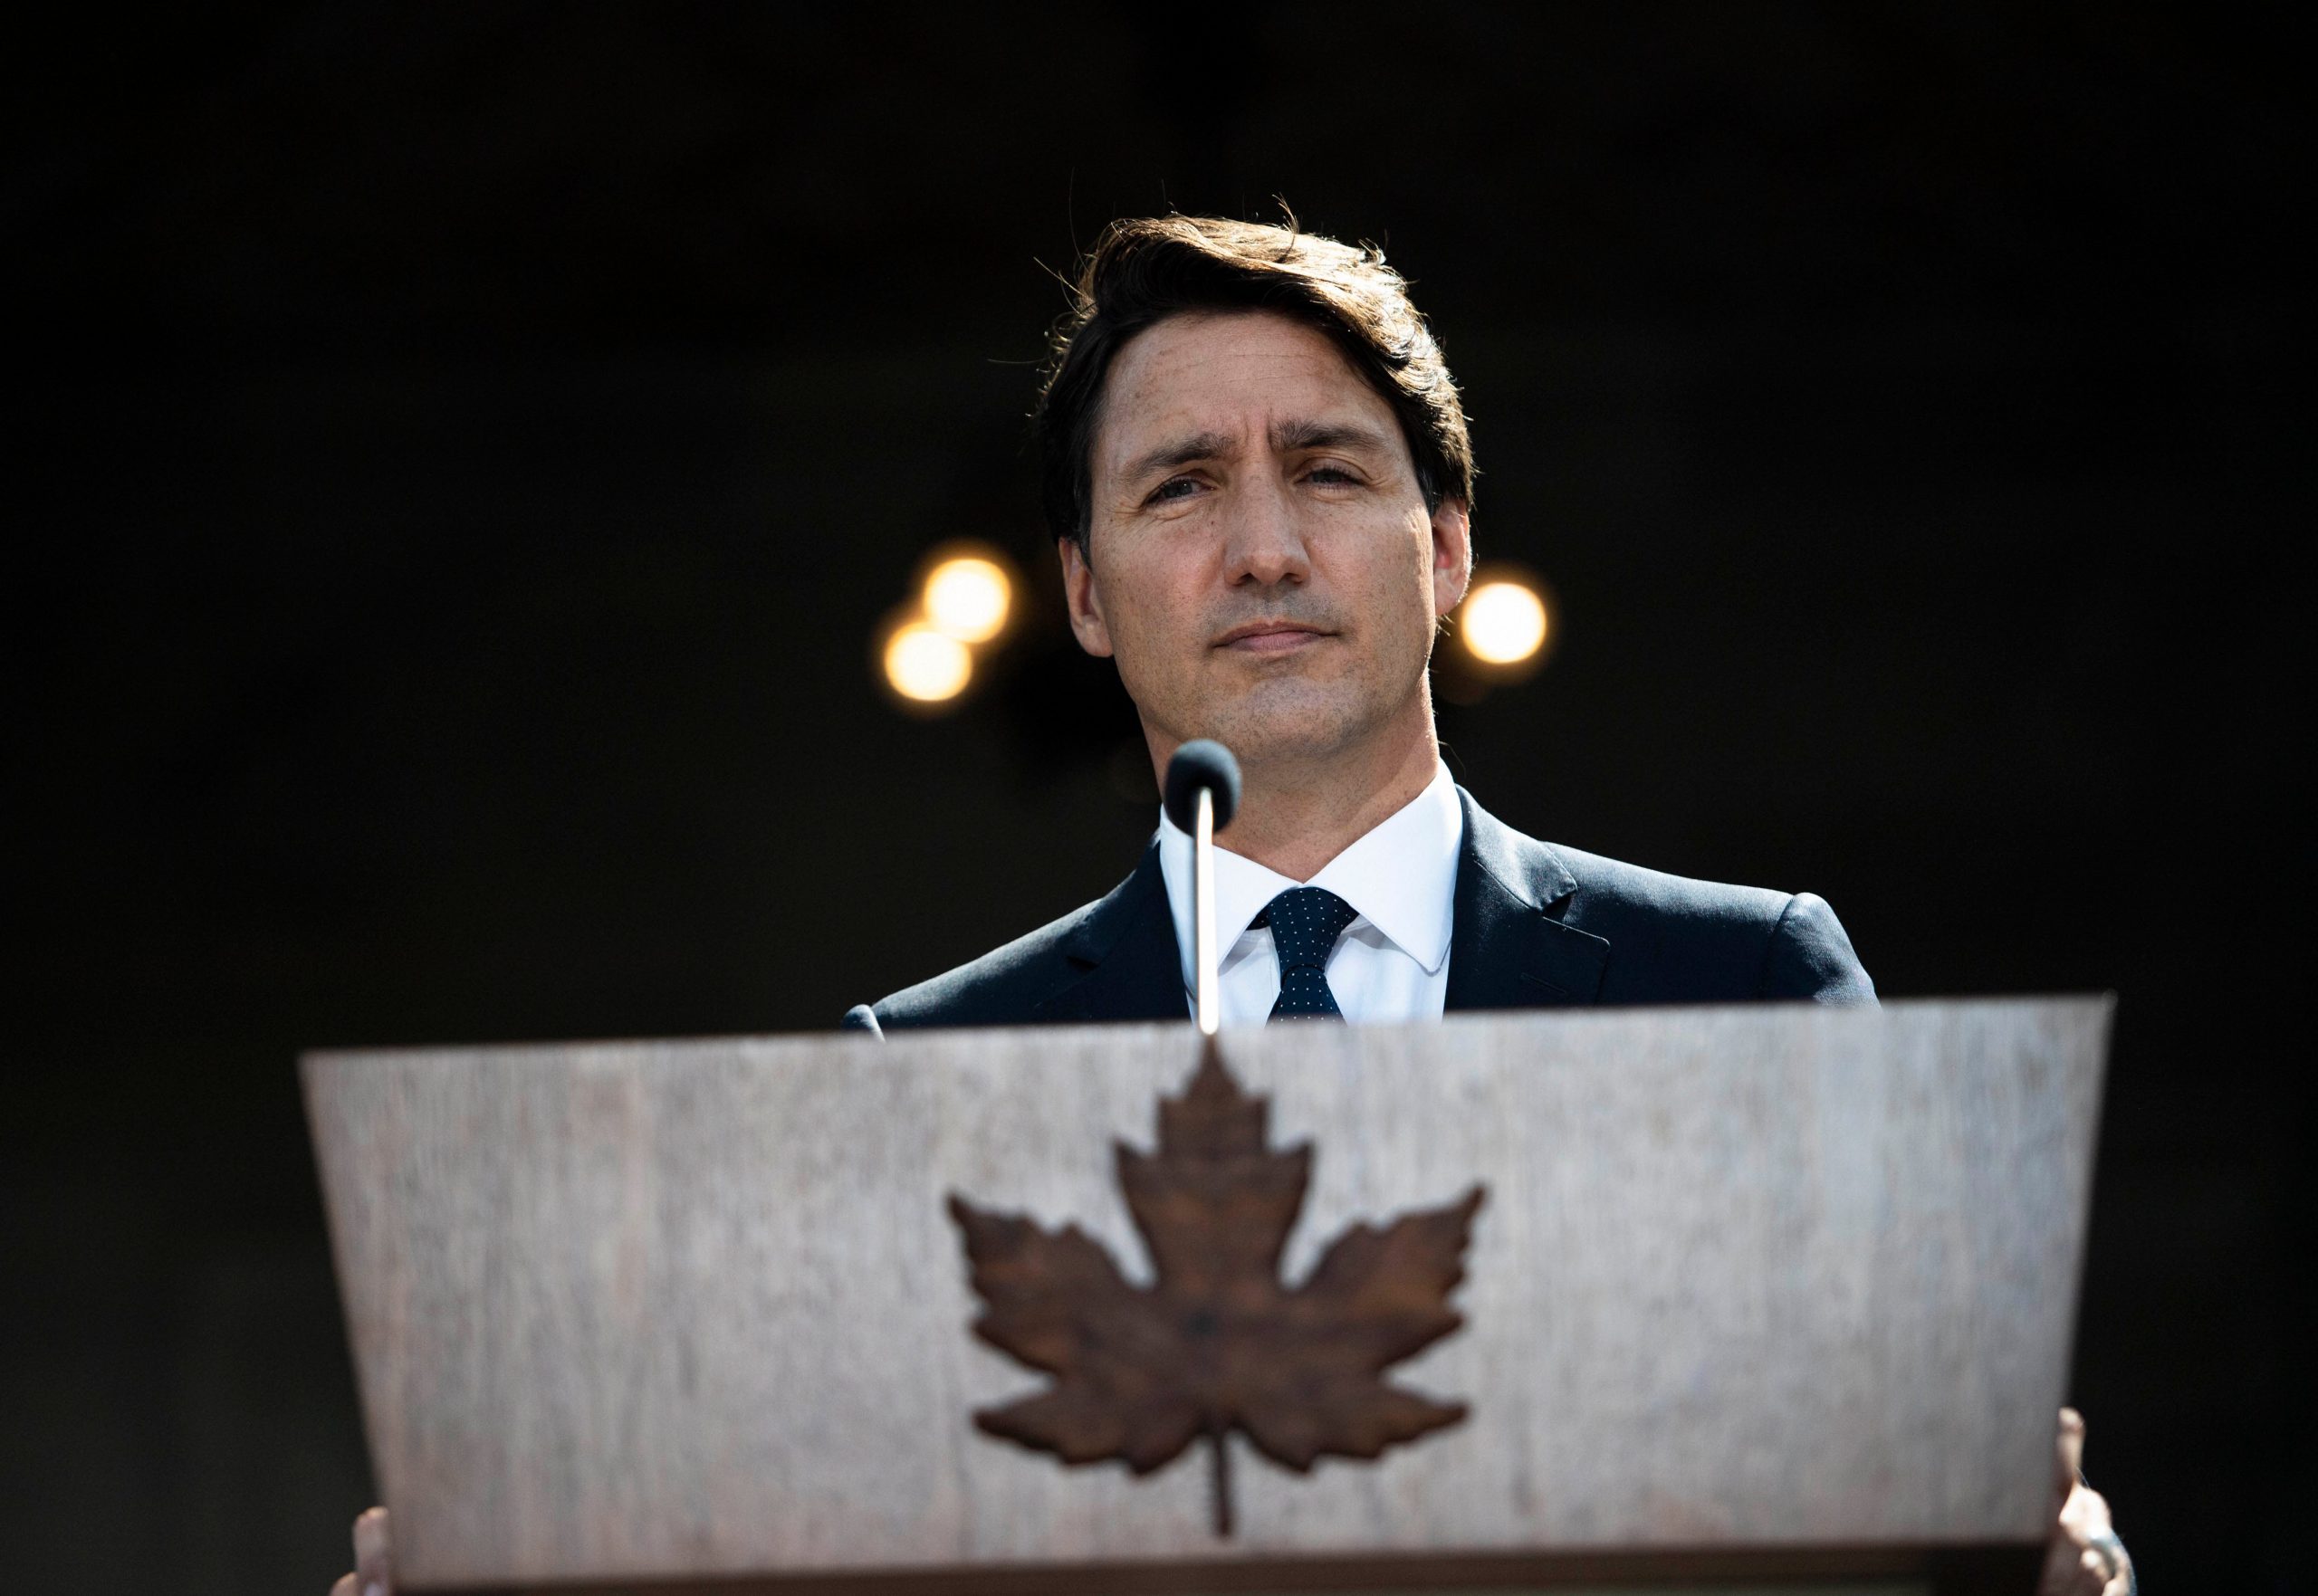 Horrific and heartbreaking: Canada PM Justin Trudeau on Saskatchewan mass stabbing